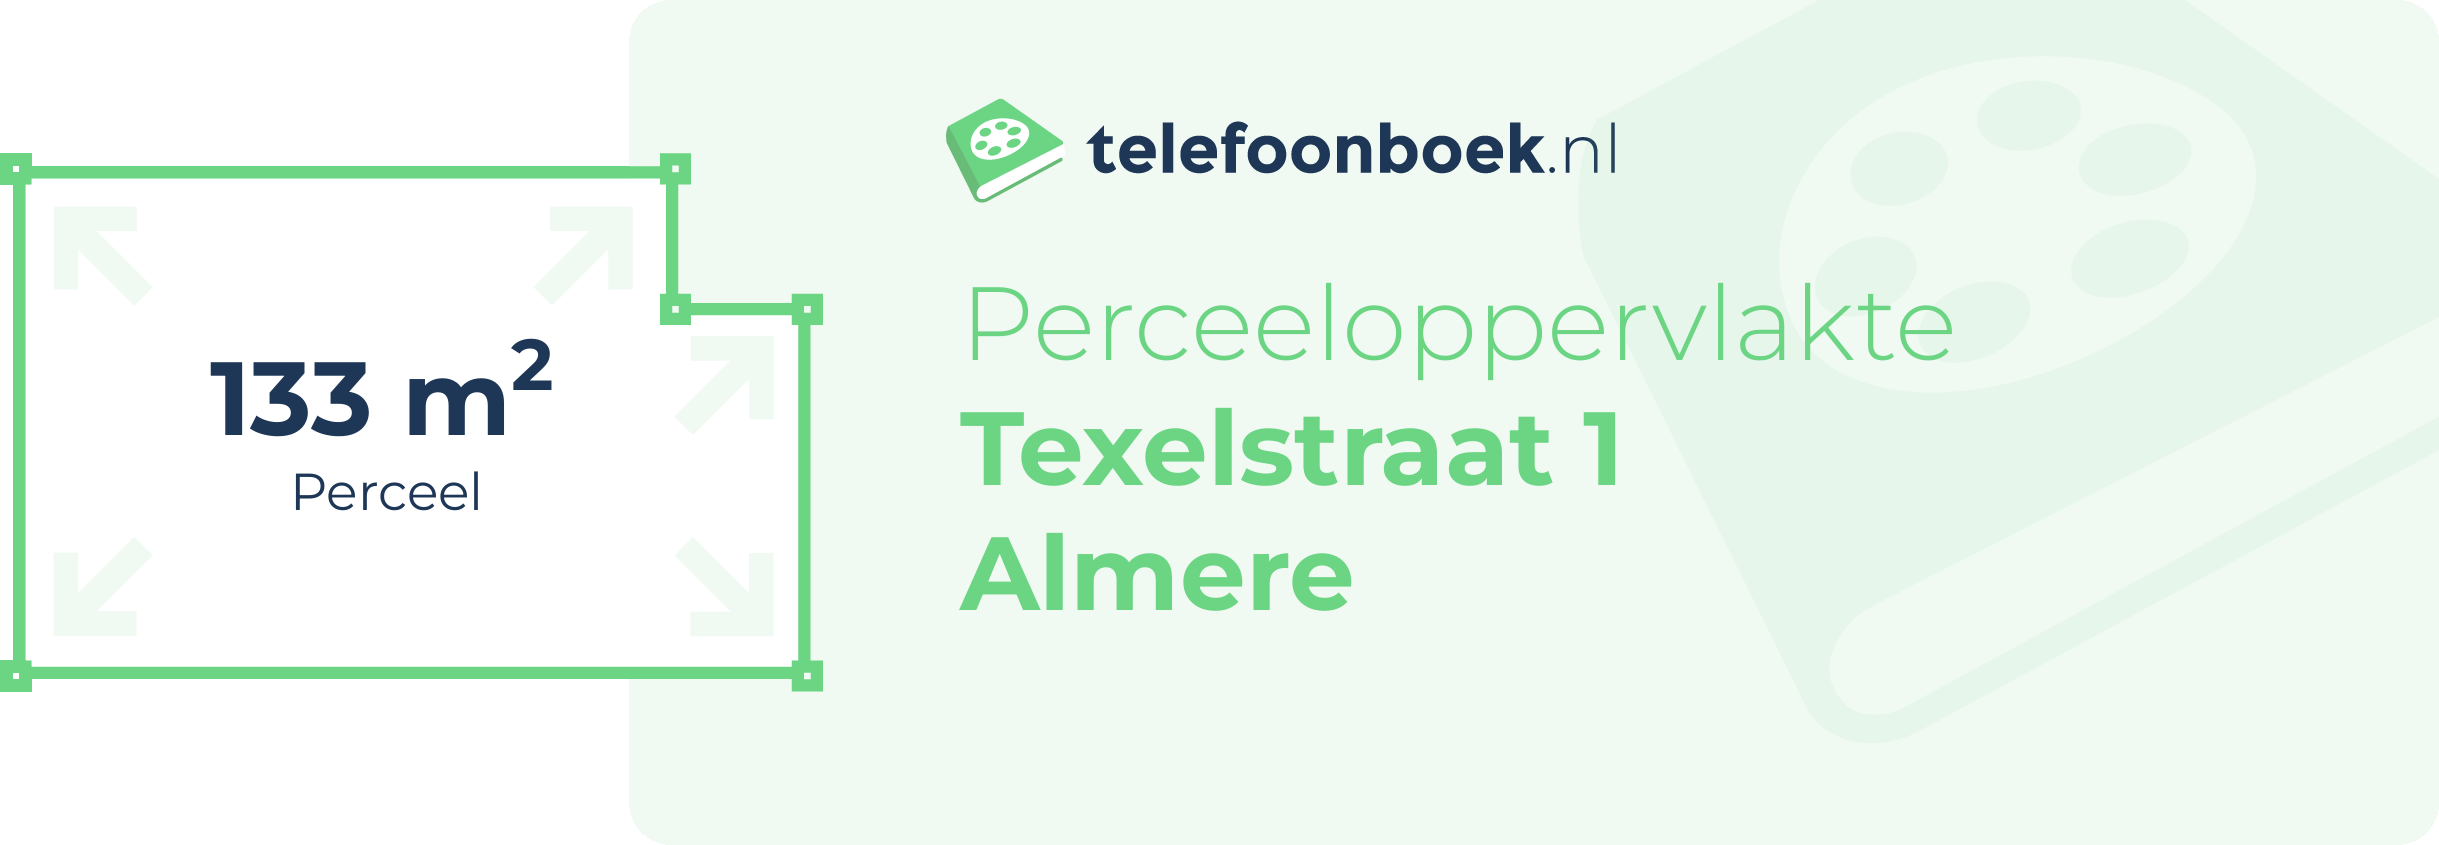 Perceeloppervlakte Texelstraat 1 Almere